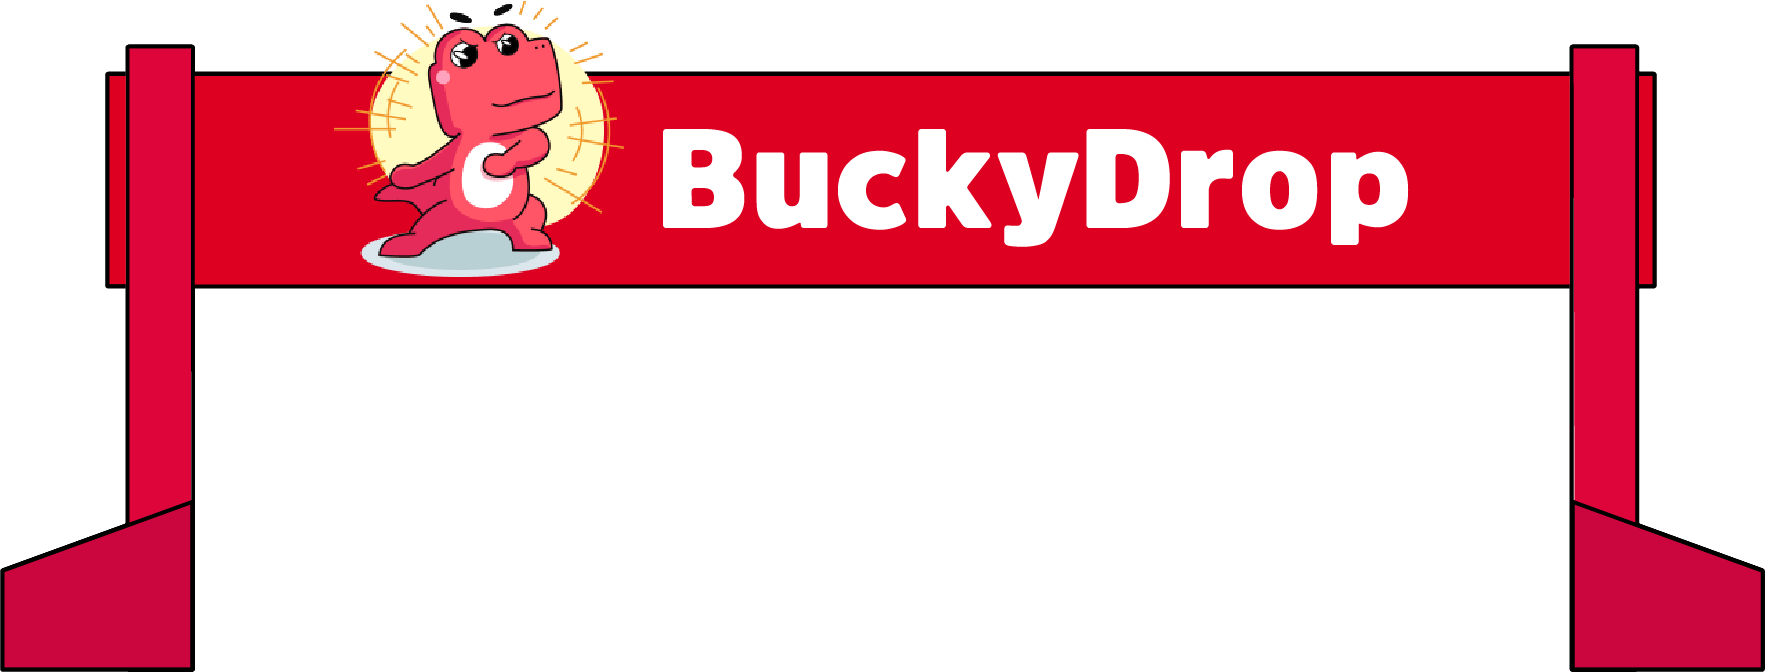 buckydrop dropshipping business mode